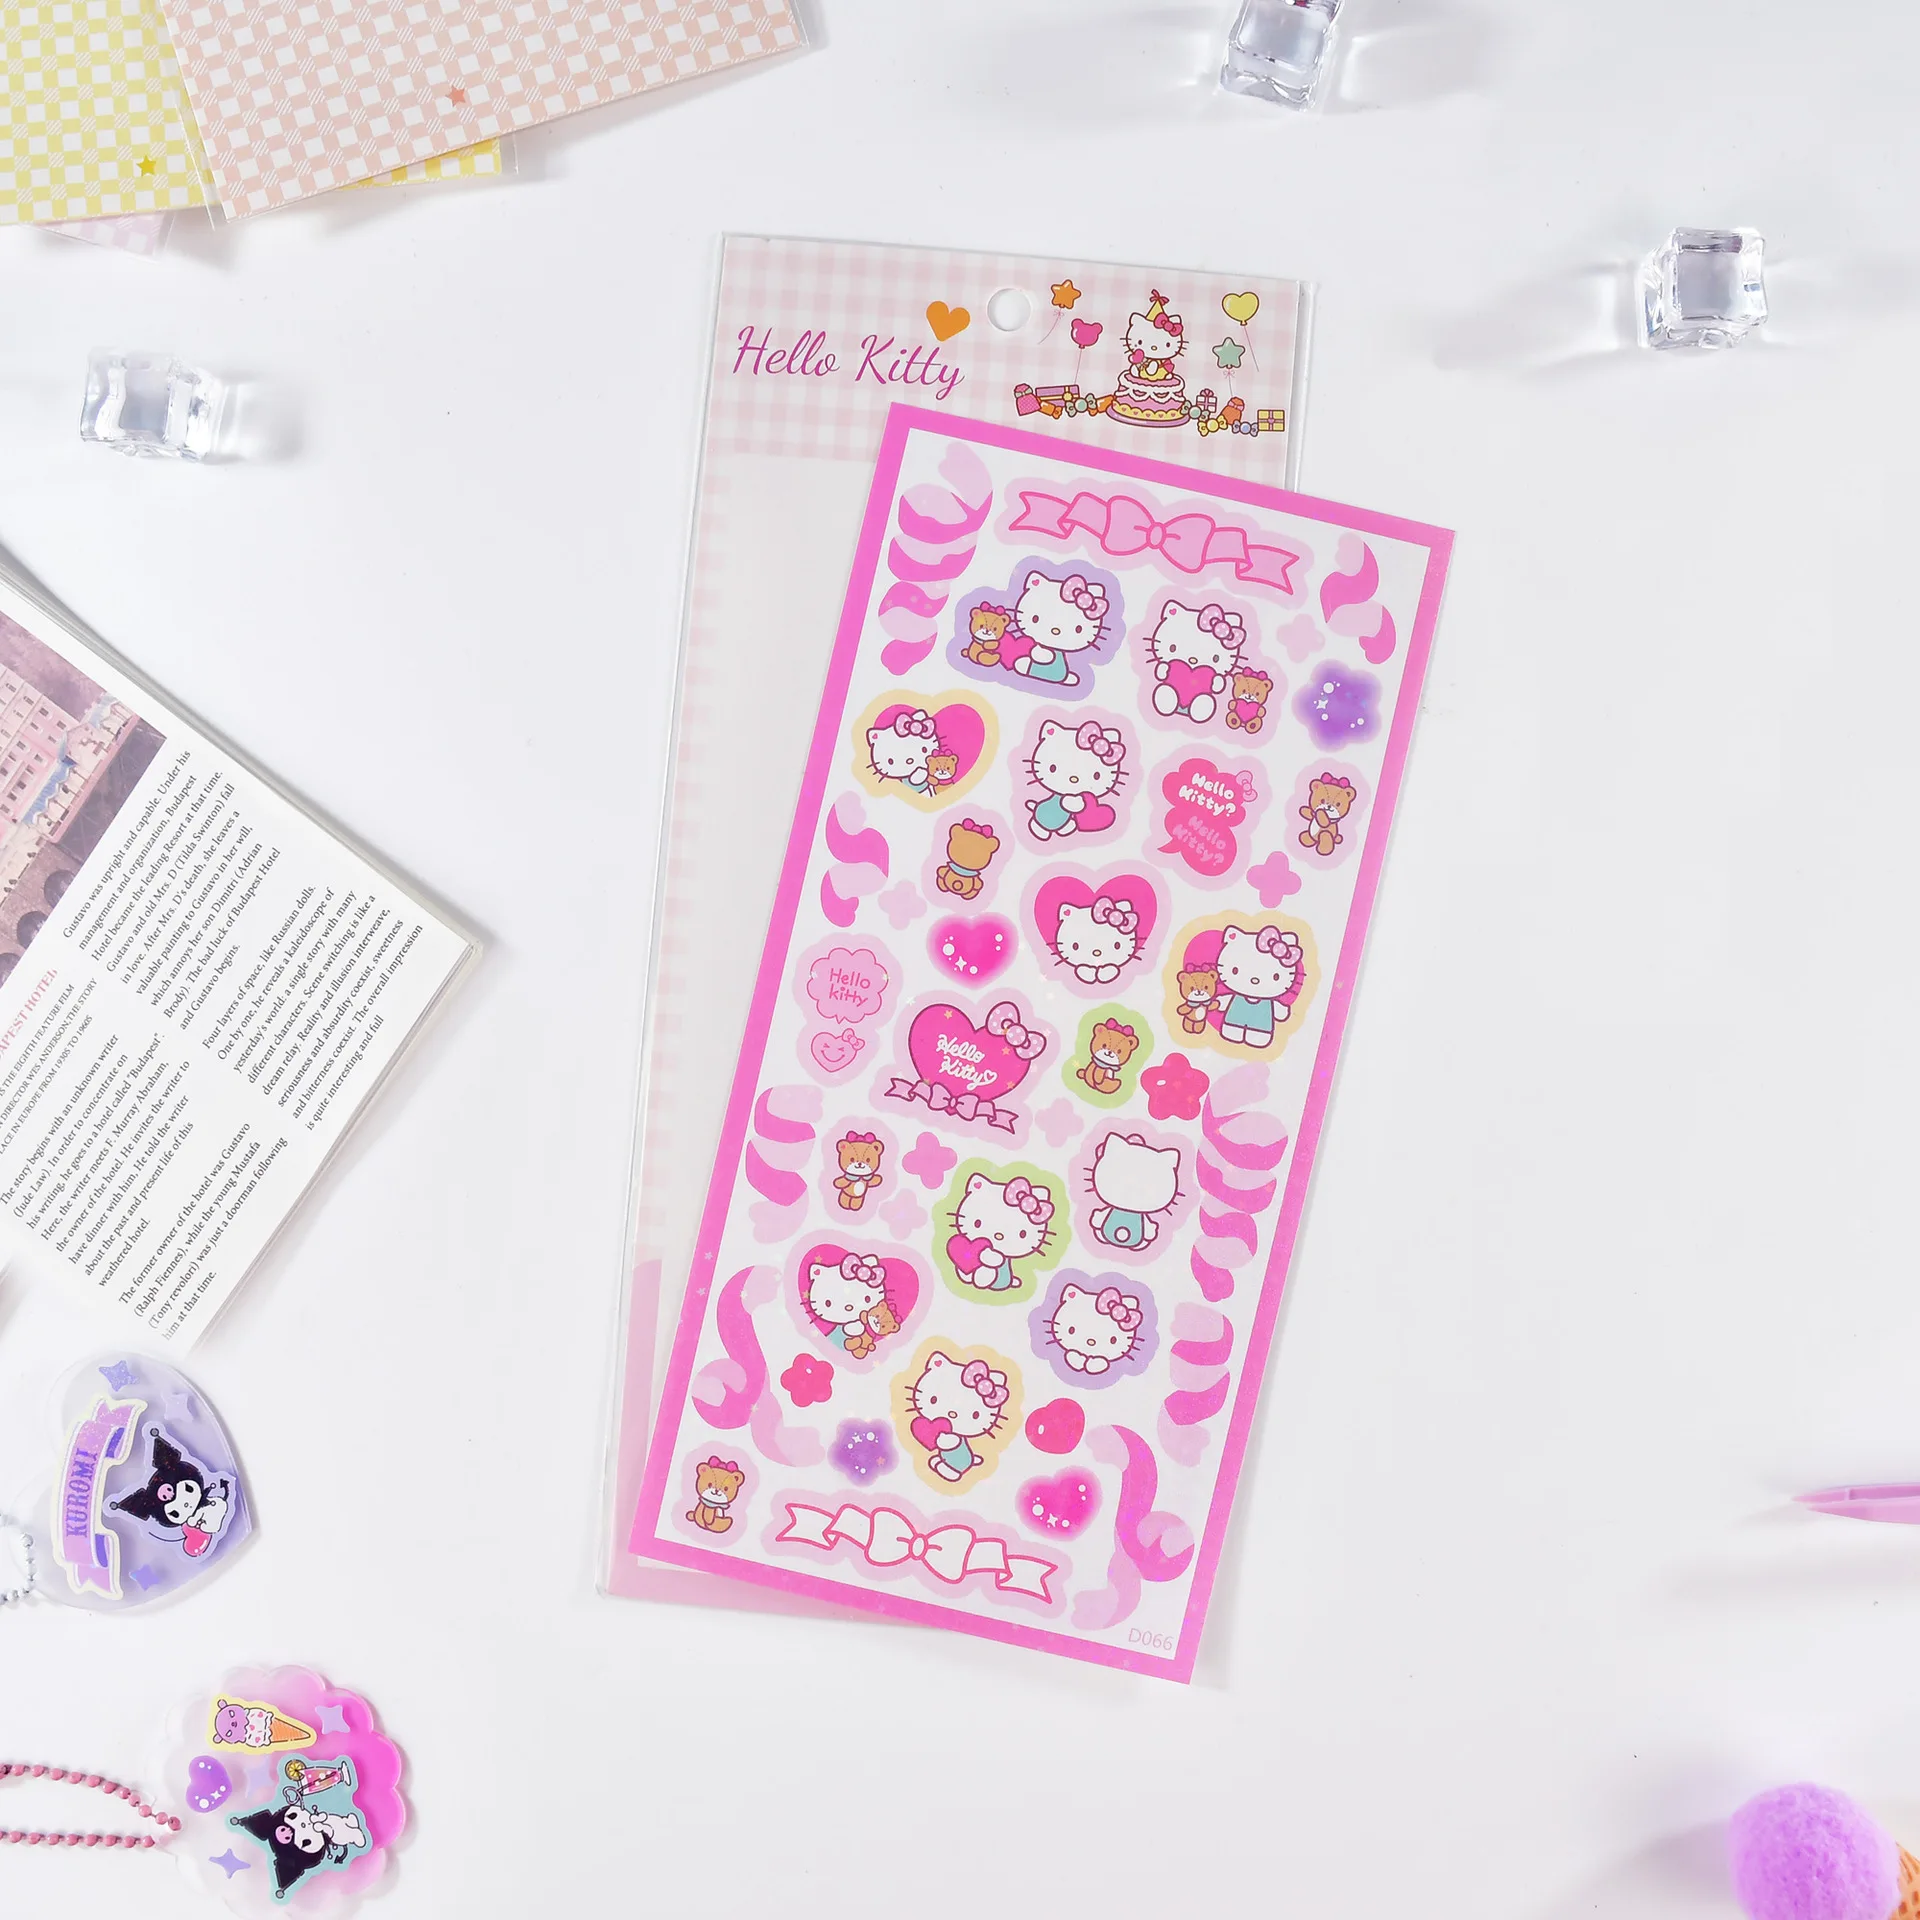 Sanrio Drop Peko Flake Sticker Set - Pastel My Melody